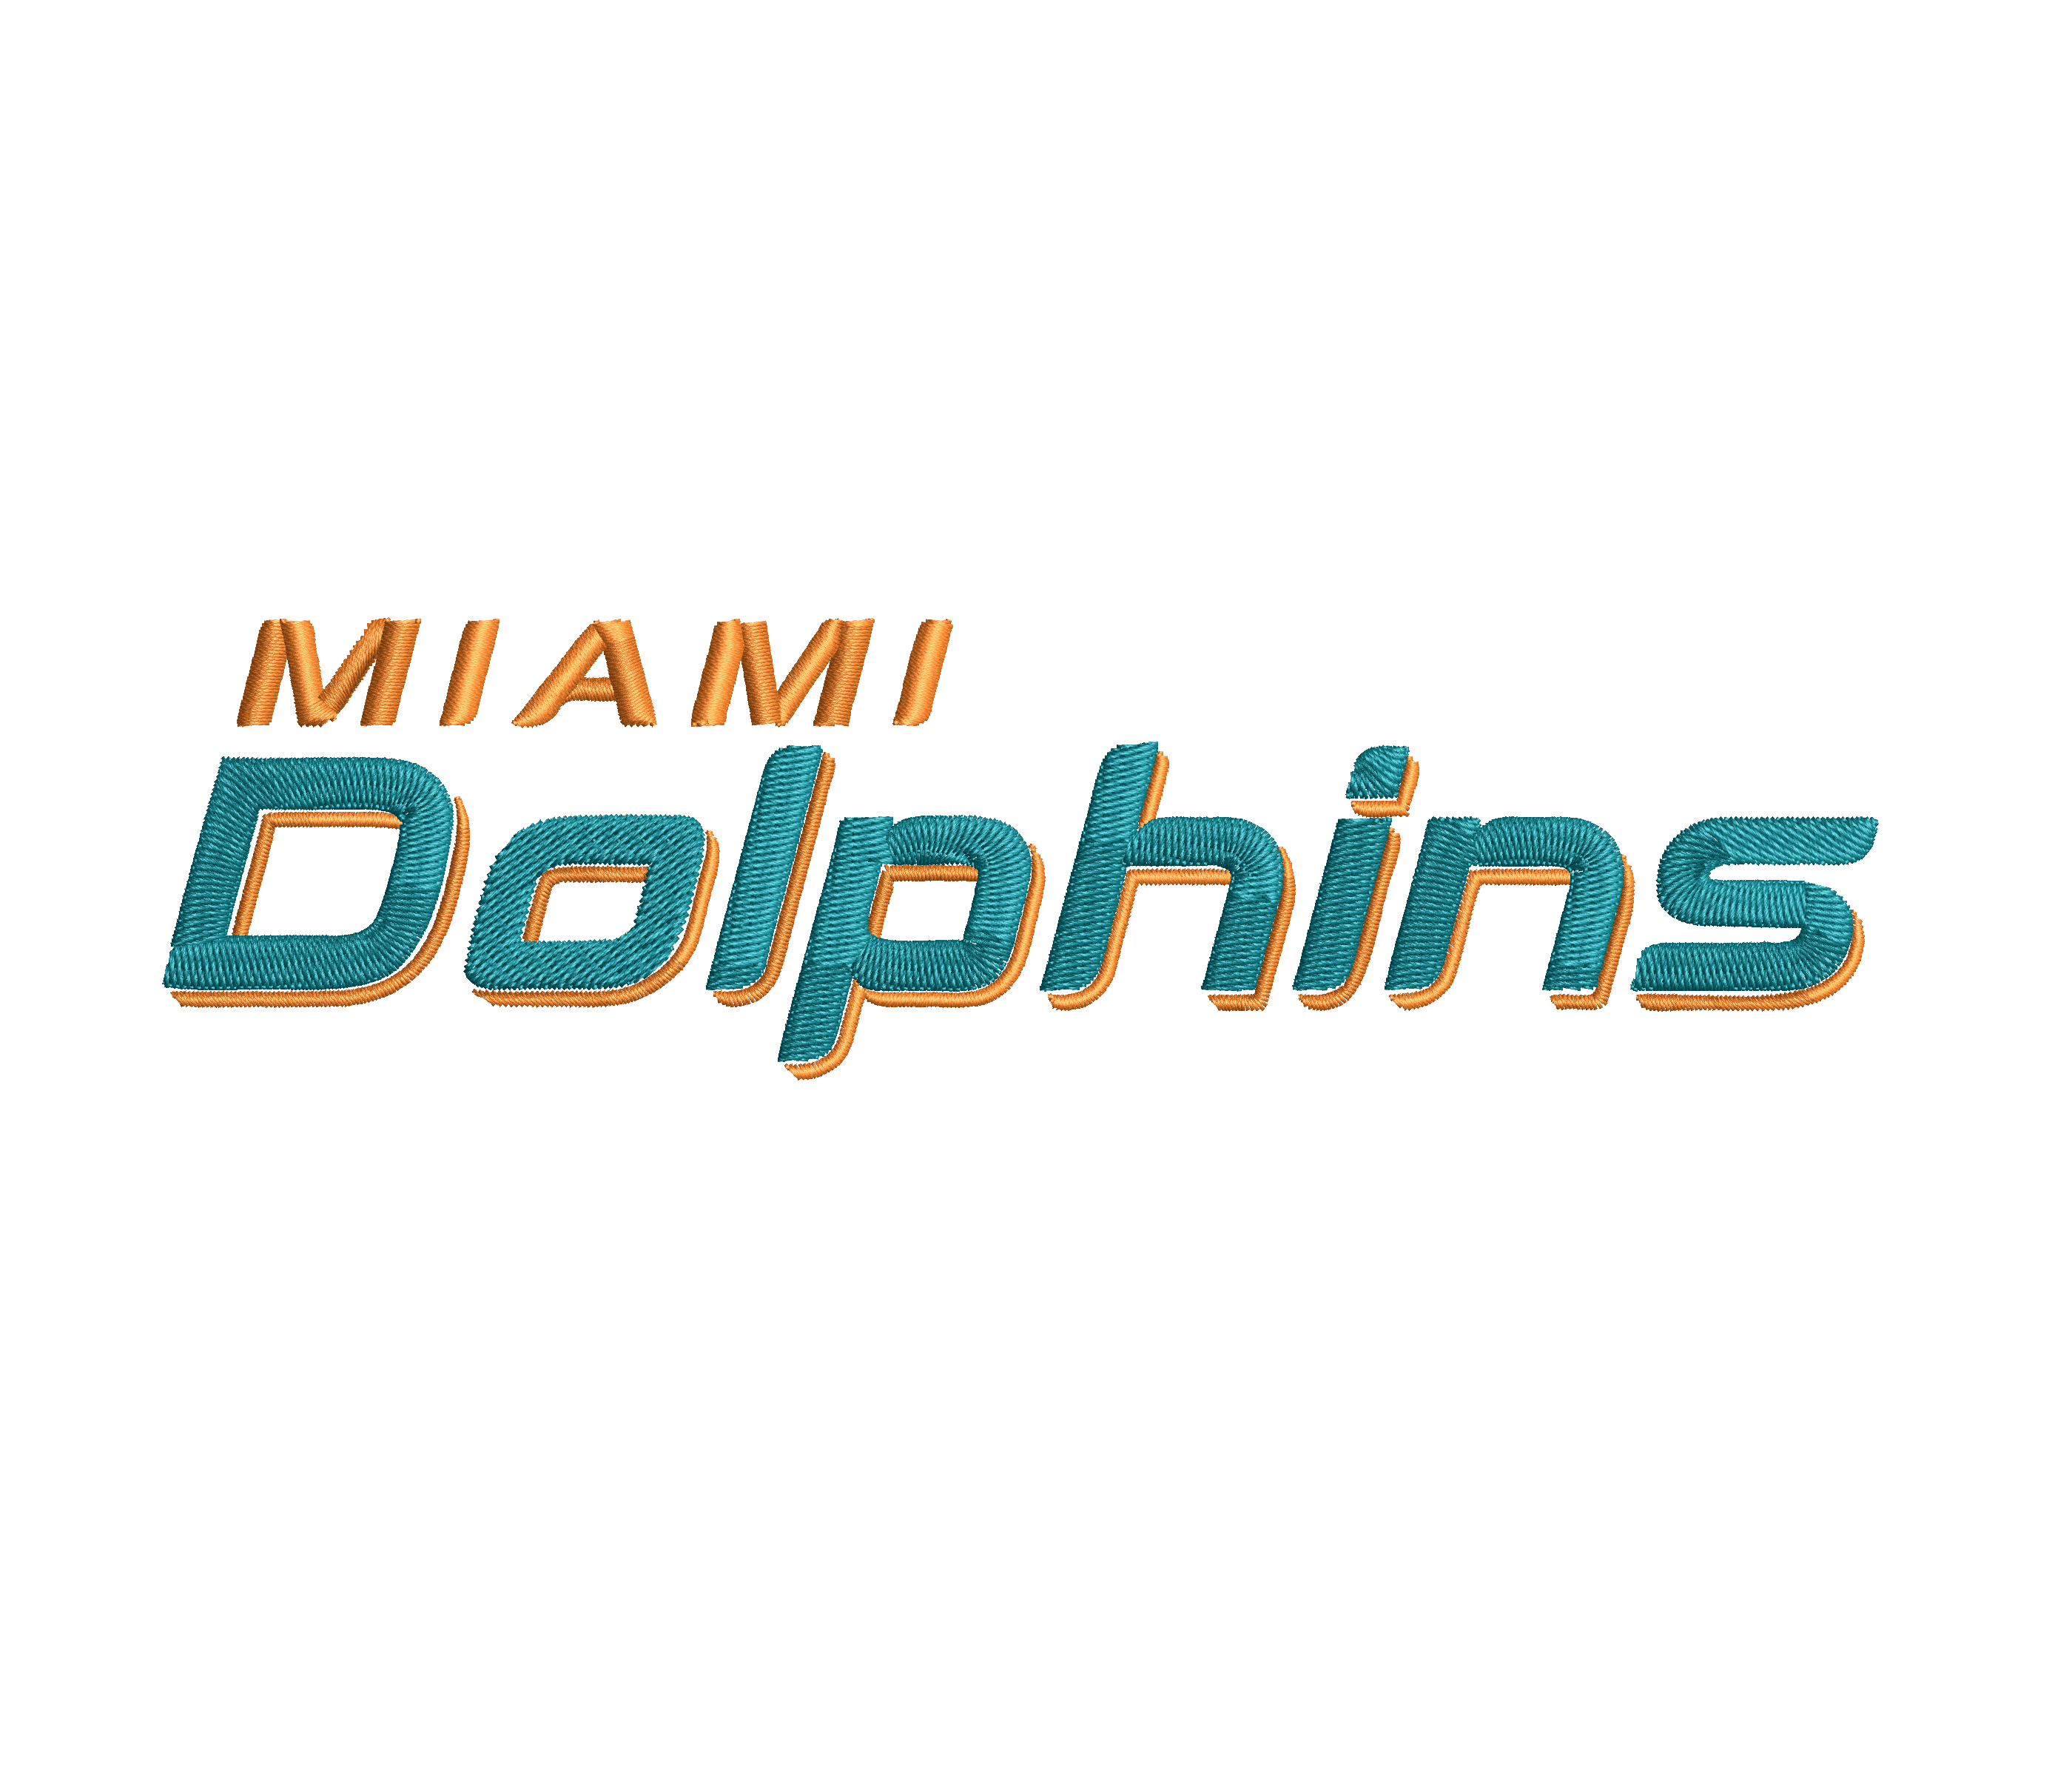 Miami Dolphins 7 : Embroidery Design